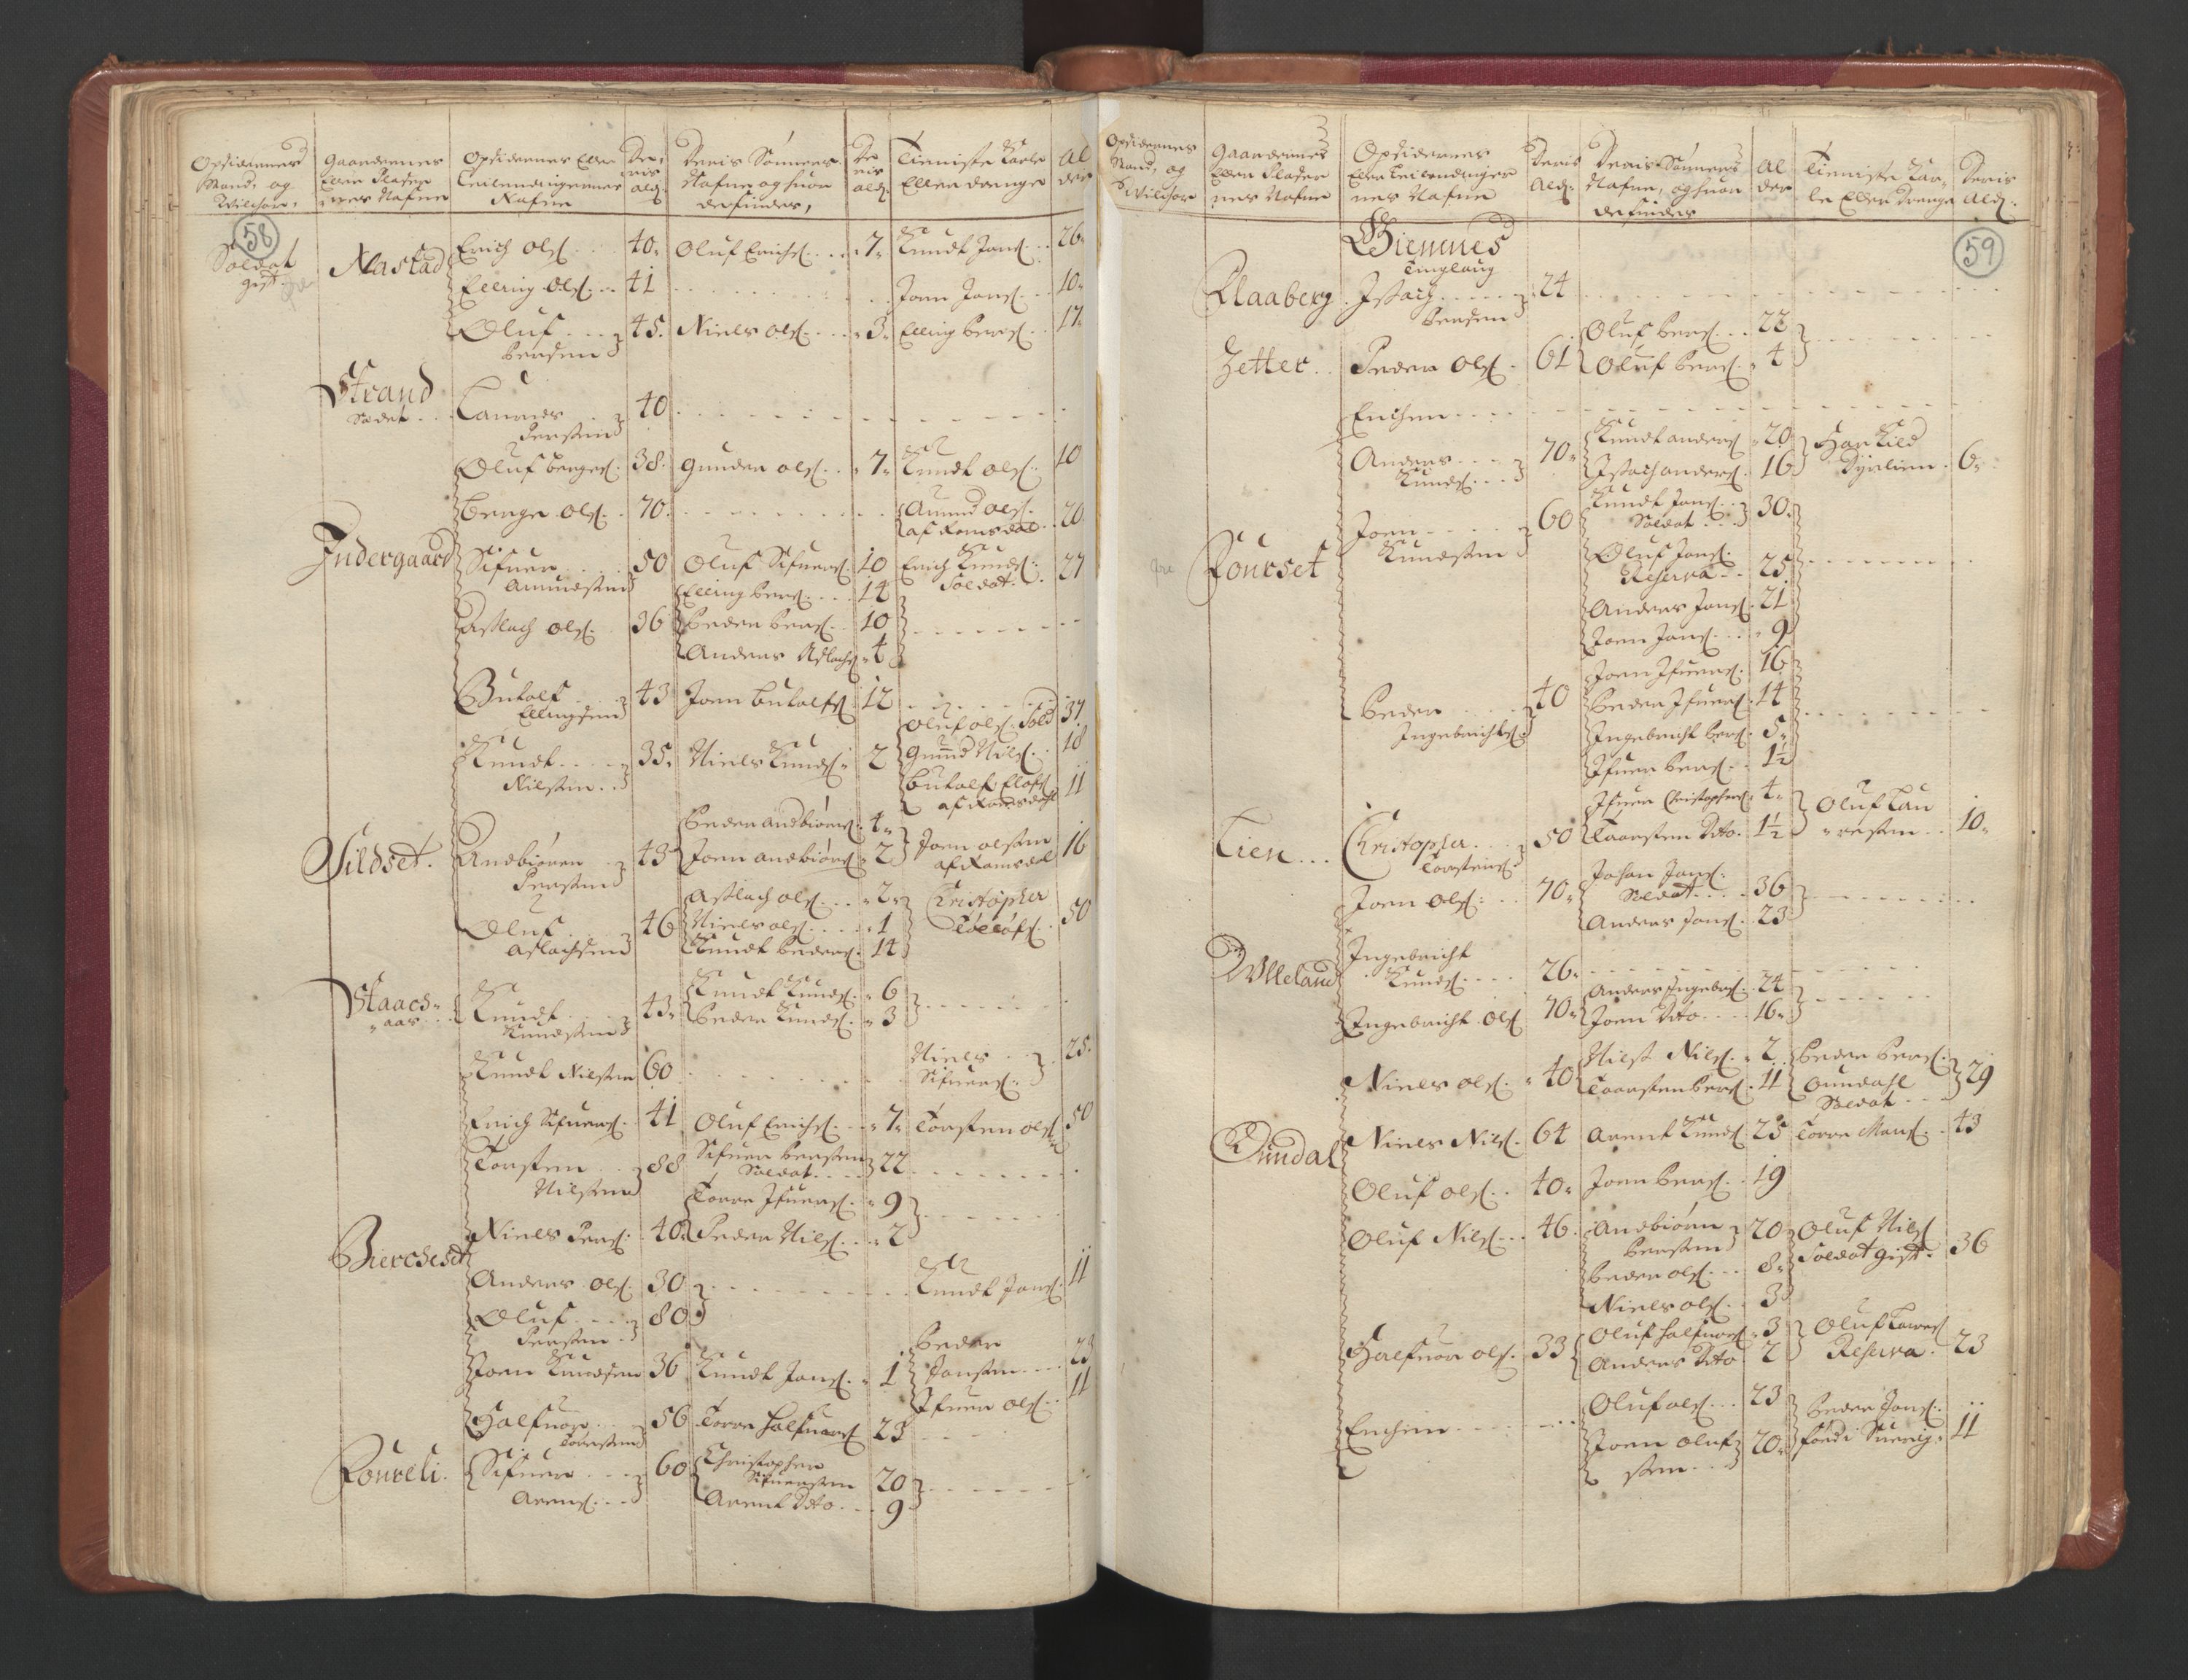 RA, Manntallet 1701, nr. 11: Nordmøre fogderi og Romsdal fogderi, 1701, s. 58-59